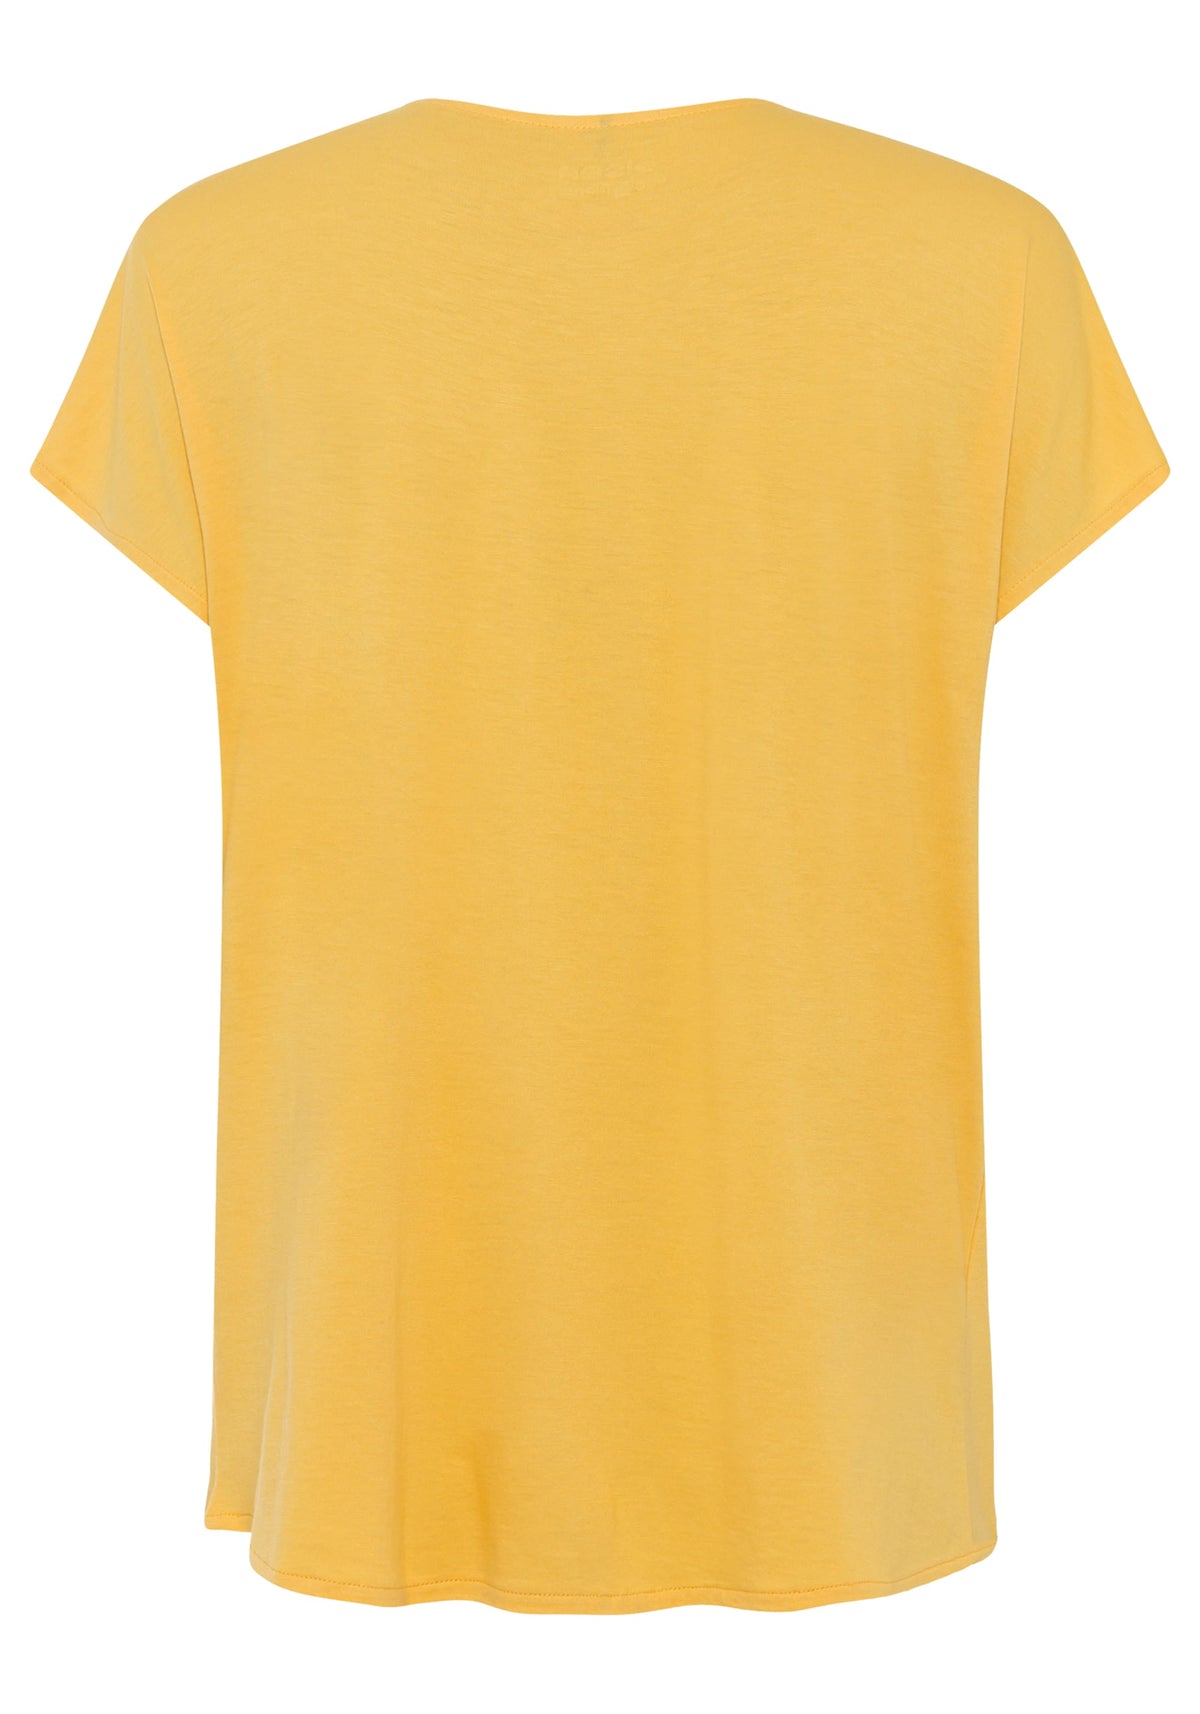 Cotton Blend Short Dolman Sleeve V-neck T-Shirt containing TENCEL™ Modal